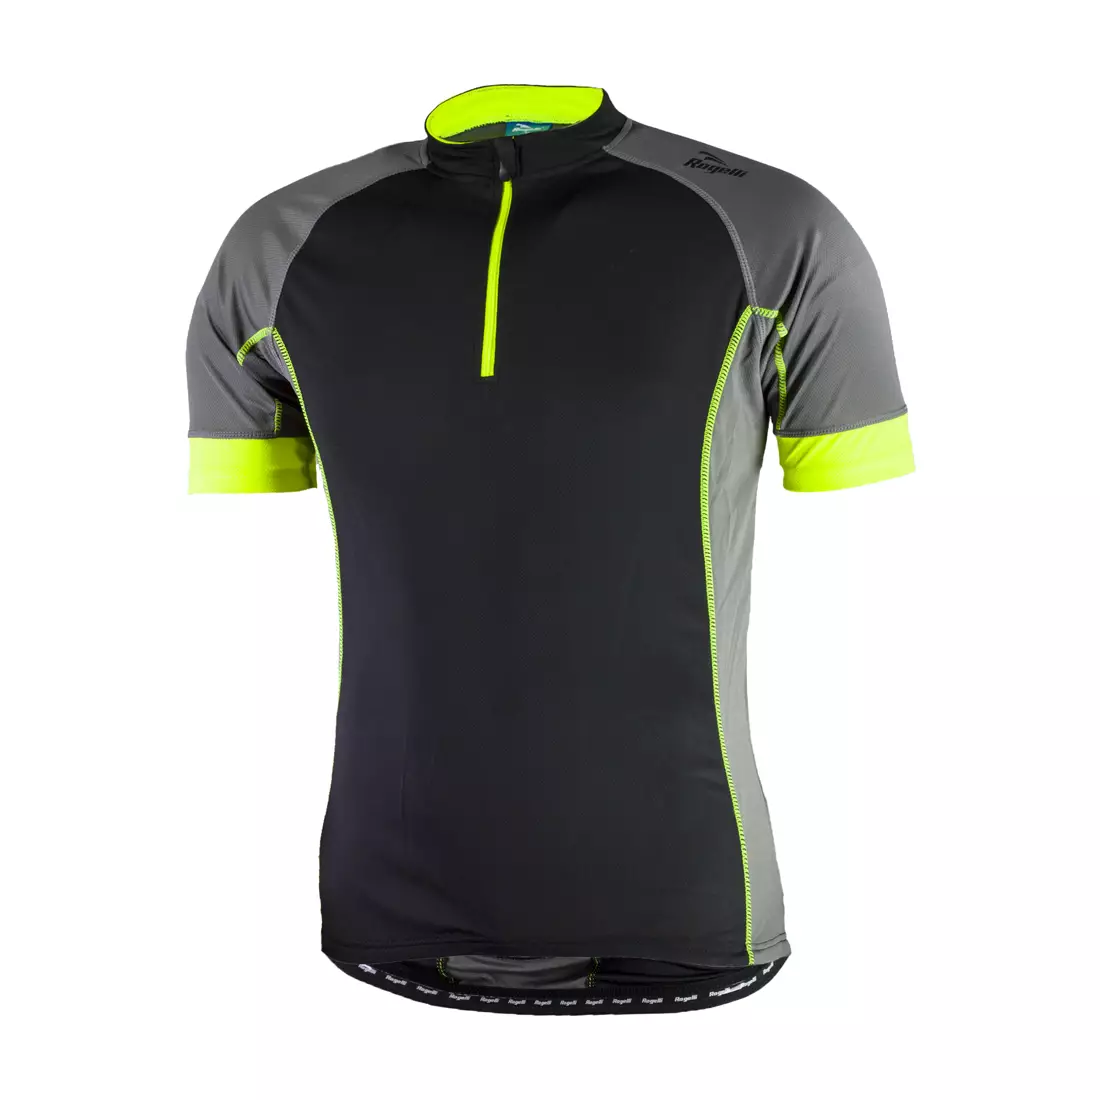 ROGELLI MANTUA - men's cycling jersey 001.061, black and fluorine